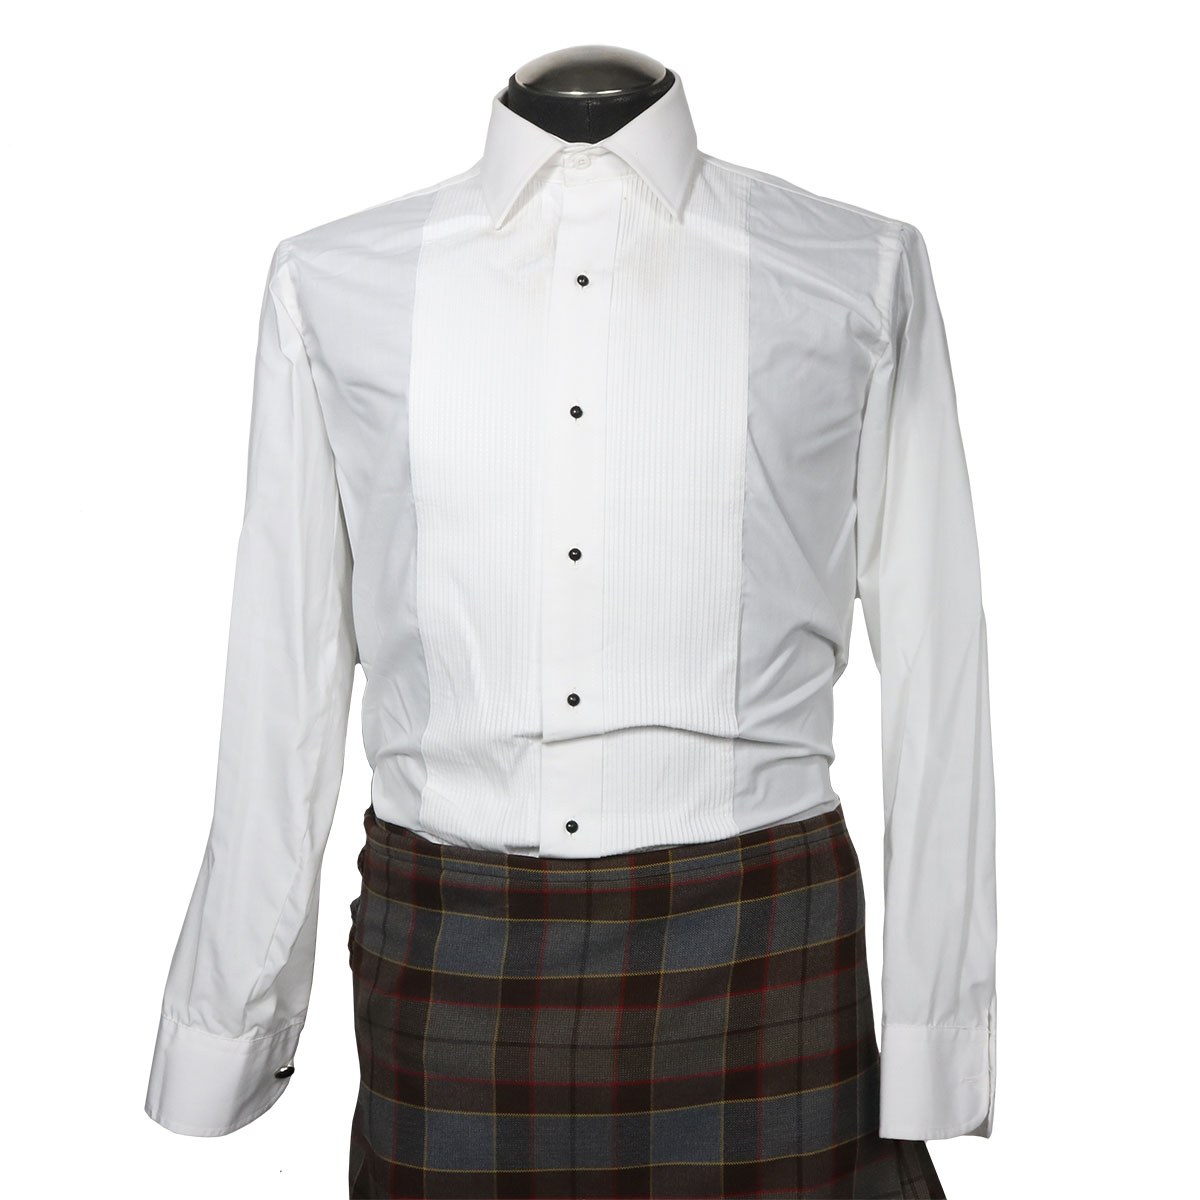 Kilt Shirts - Highland Shirts - Jacobite Shirt - Renaissance Top